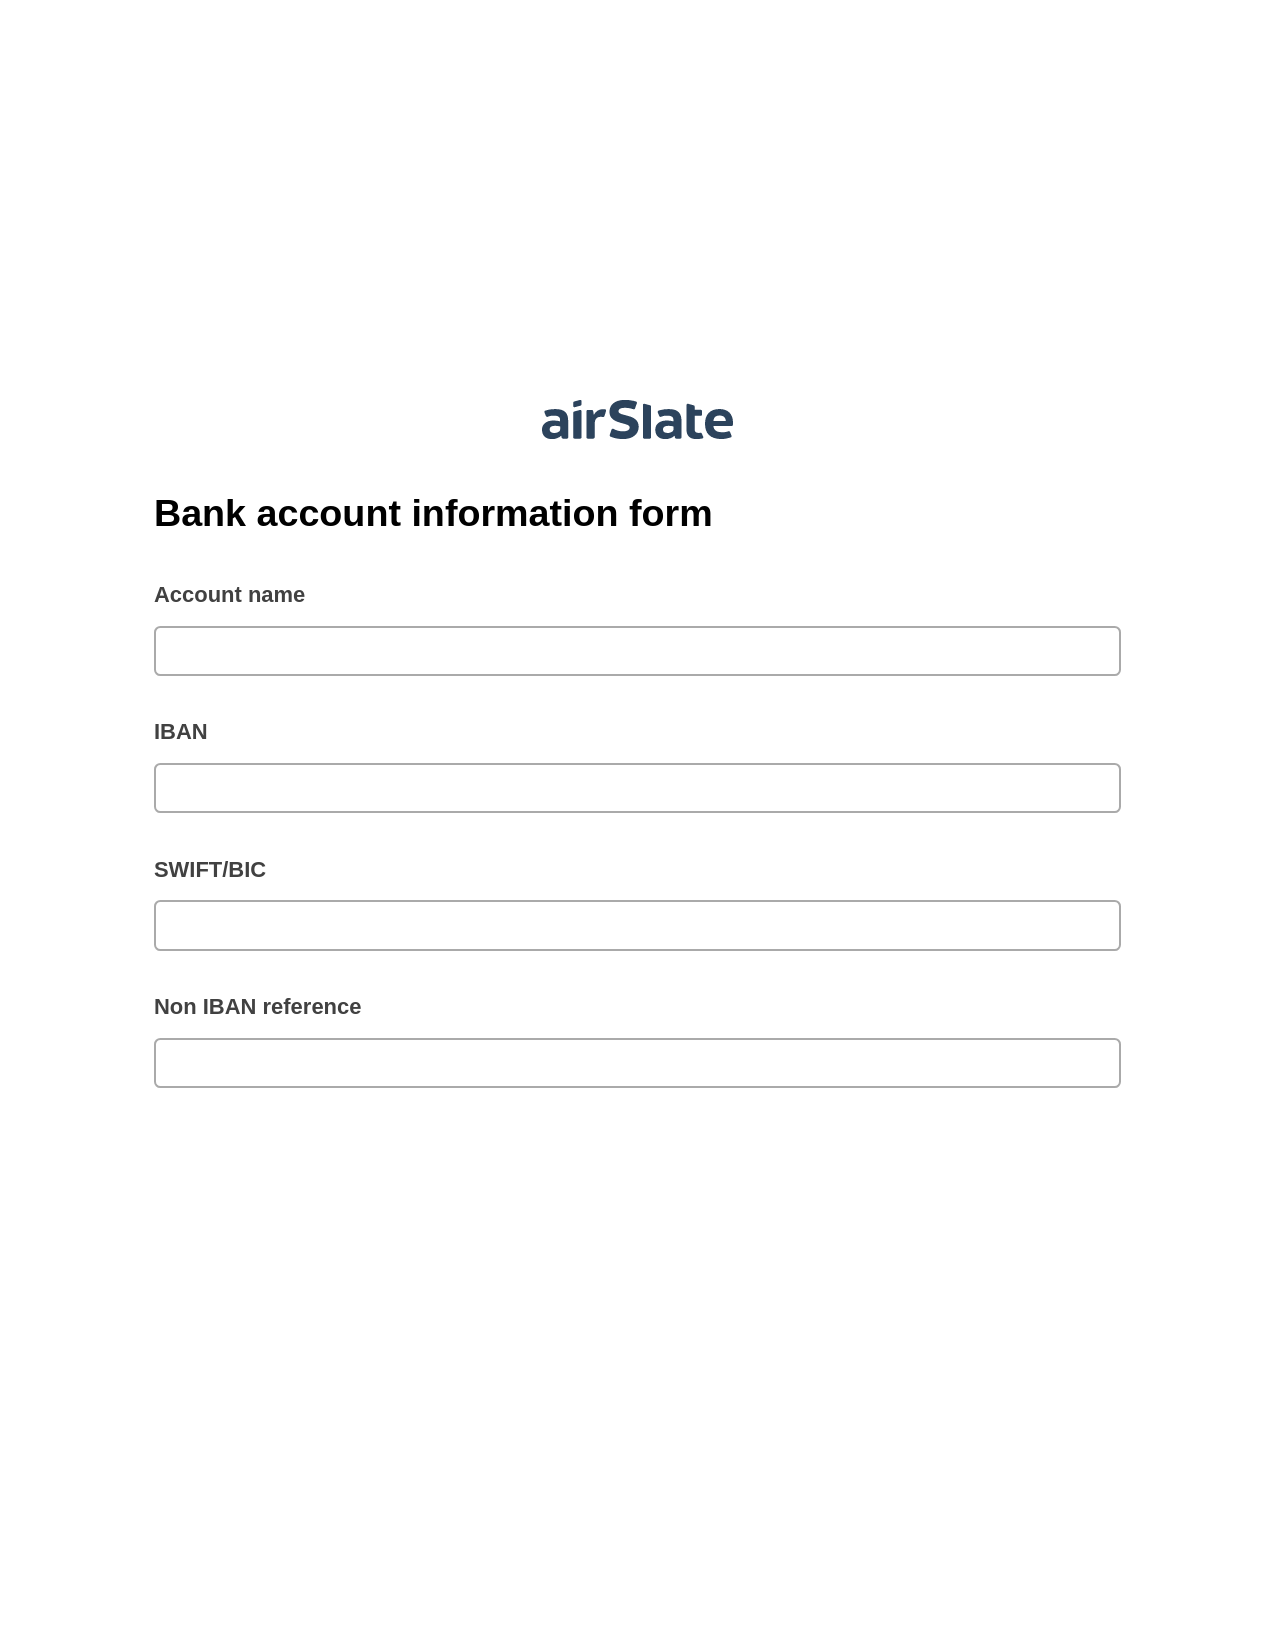 Bank account information form Pre-fill from Google Sheets Bot, Audit Trail Bot, Slack Notification Postfinish Bot